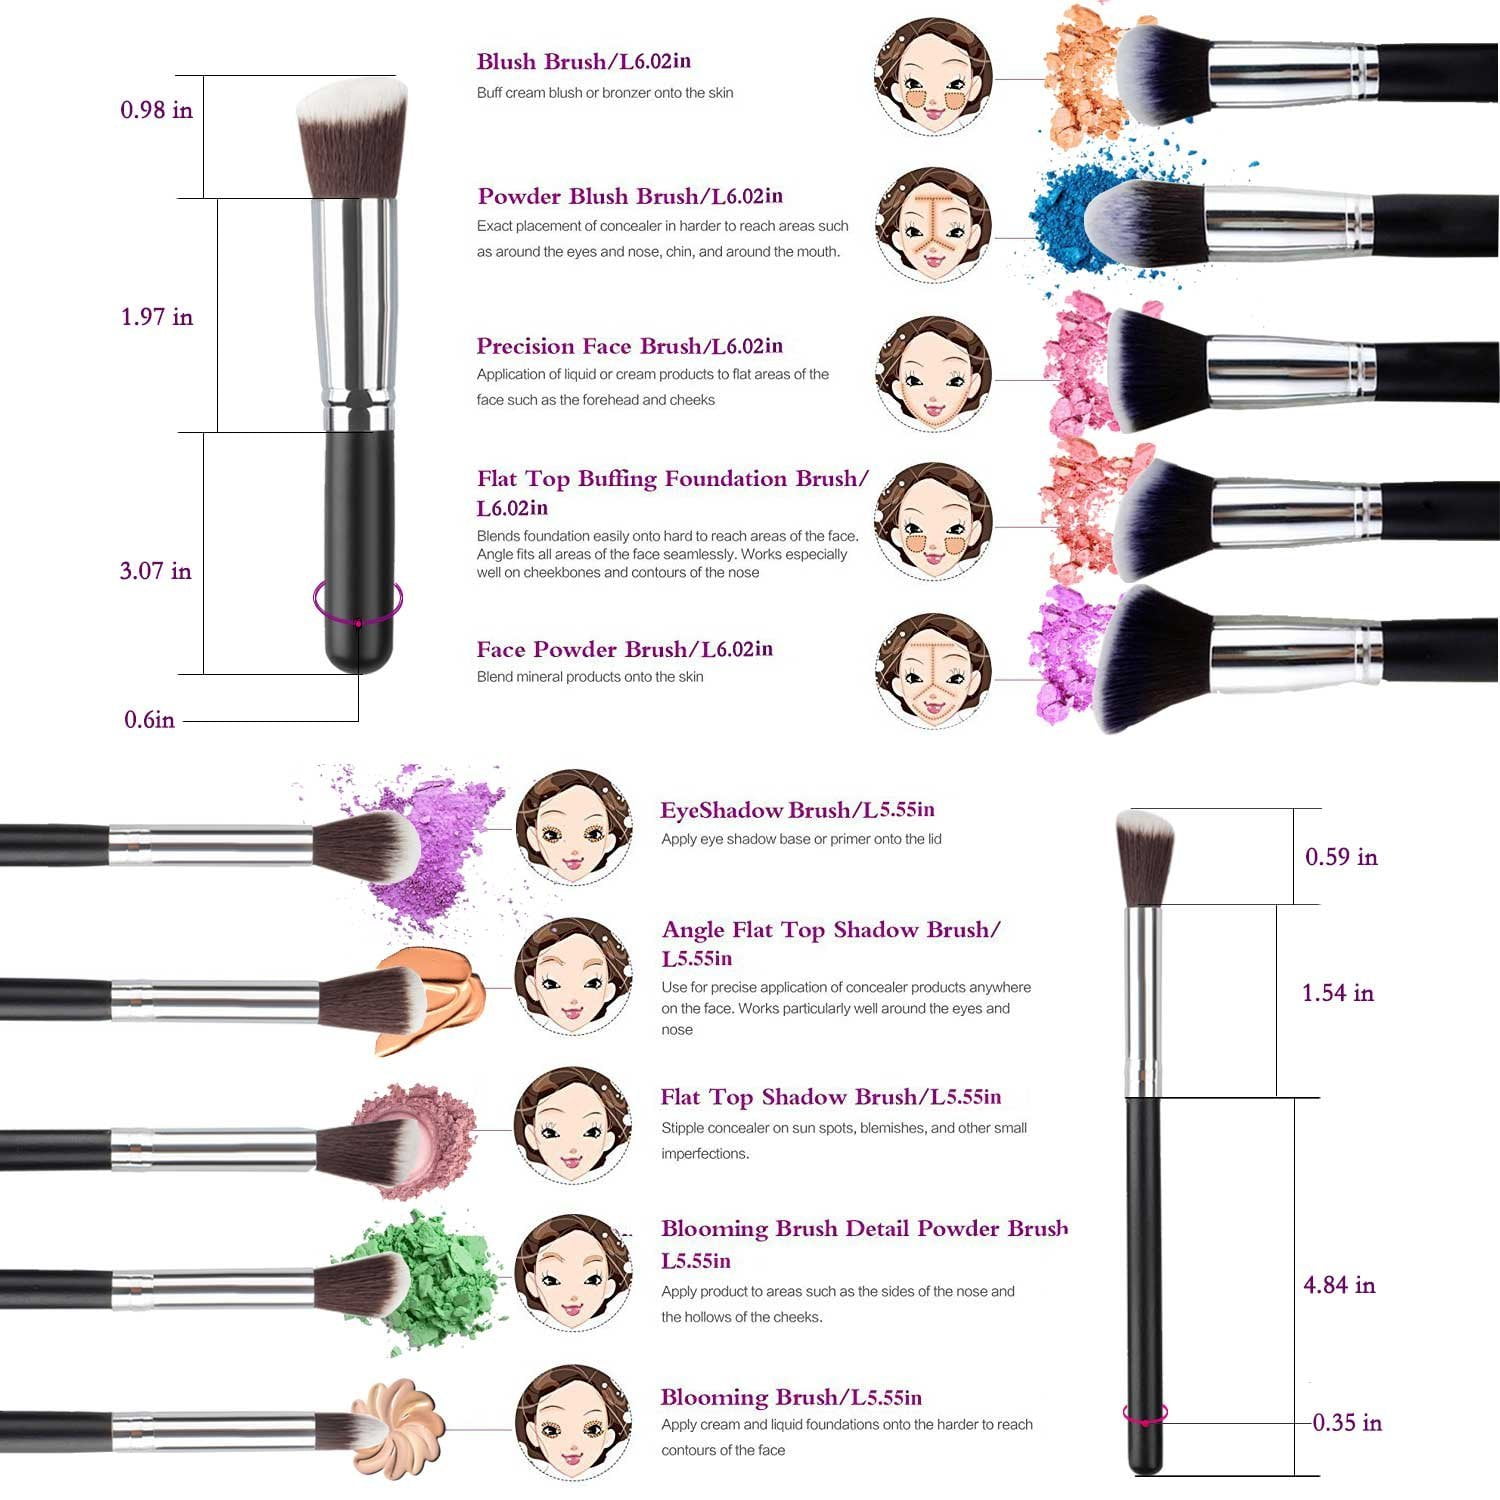 Brush Master Makeup Brushes Set 12 Pcs Professional Face Powder Blush  Eyeshadow Kabuki Brush Kit Foundation Contour Concealer Lip Makeup Brush  Set with Case